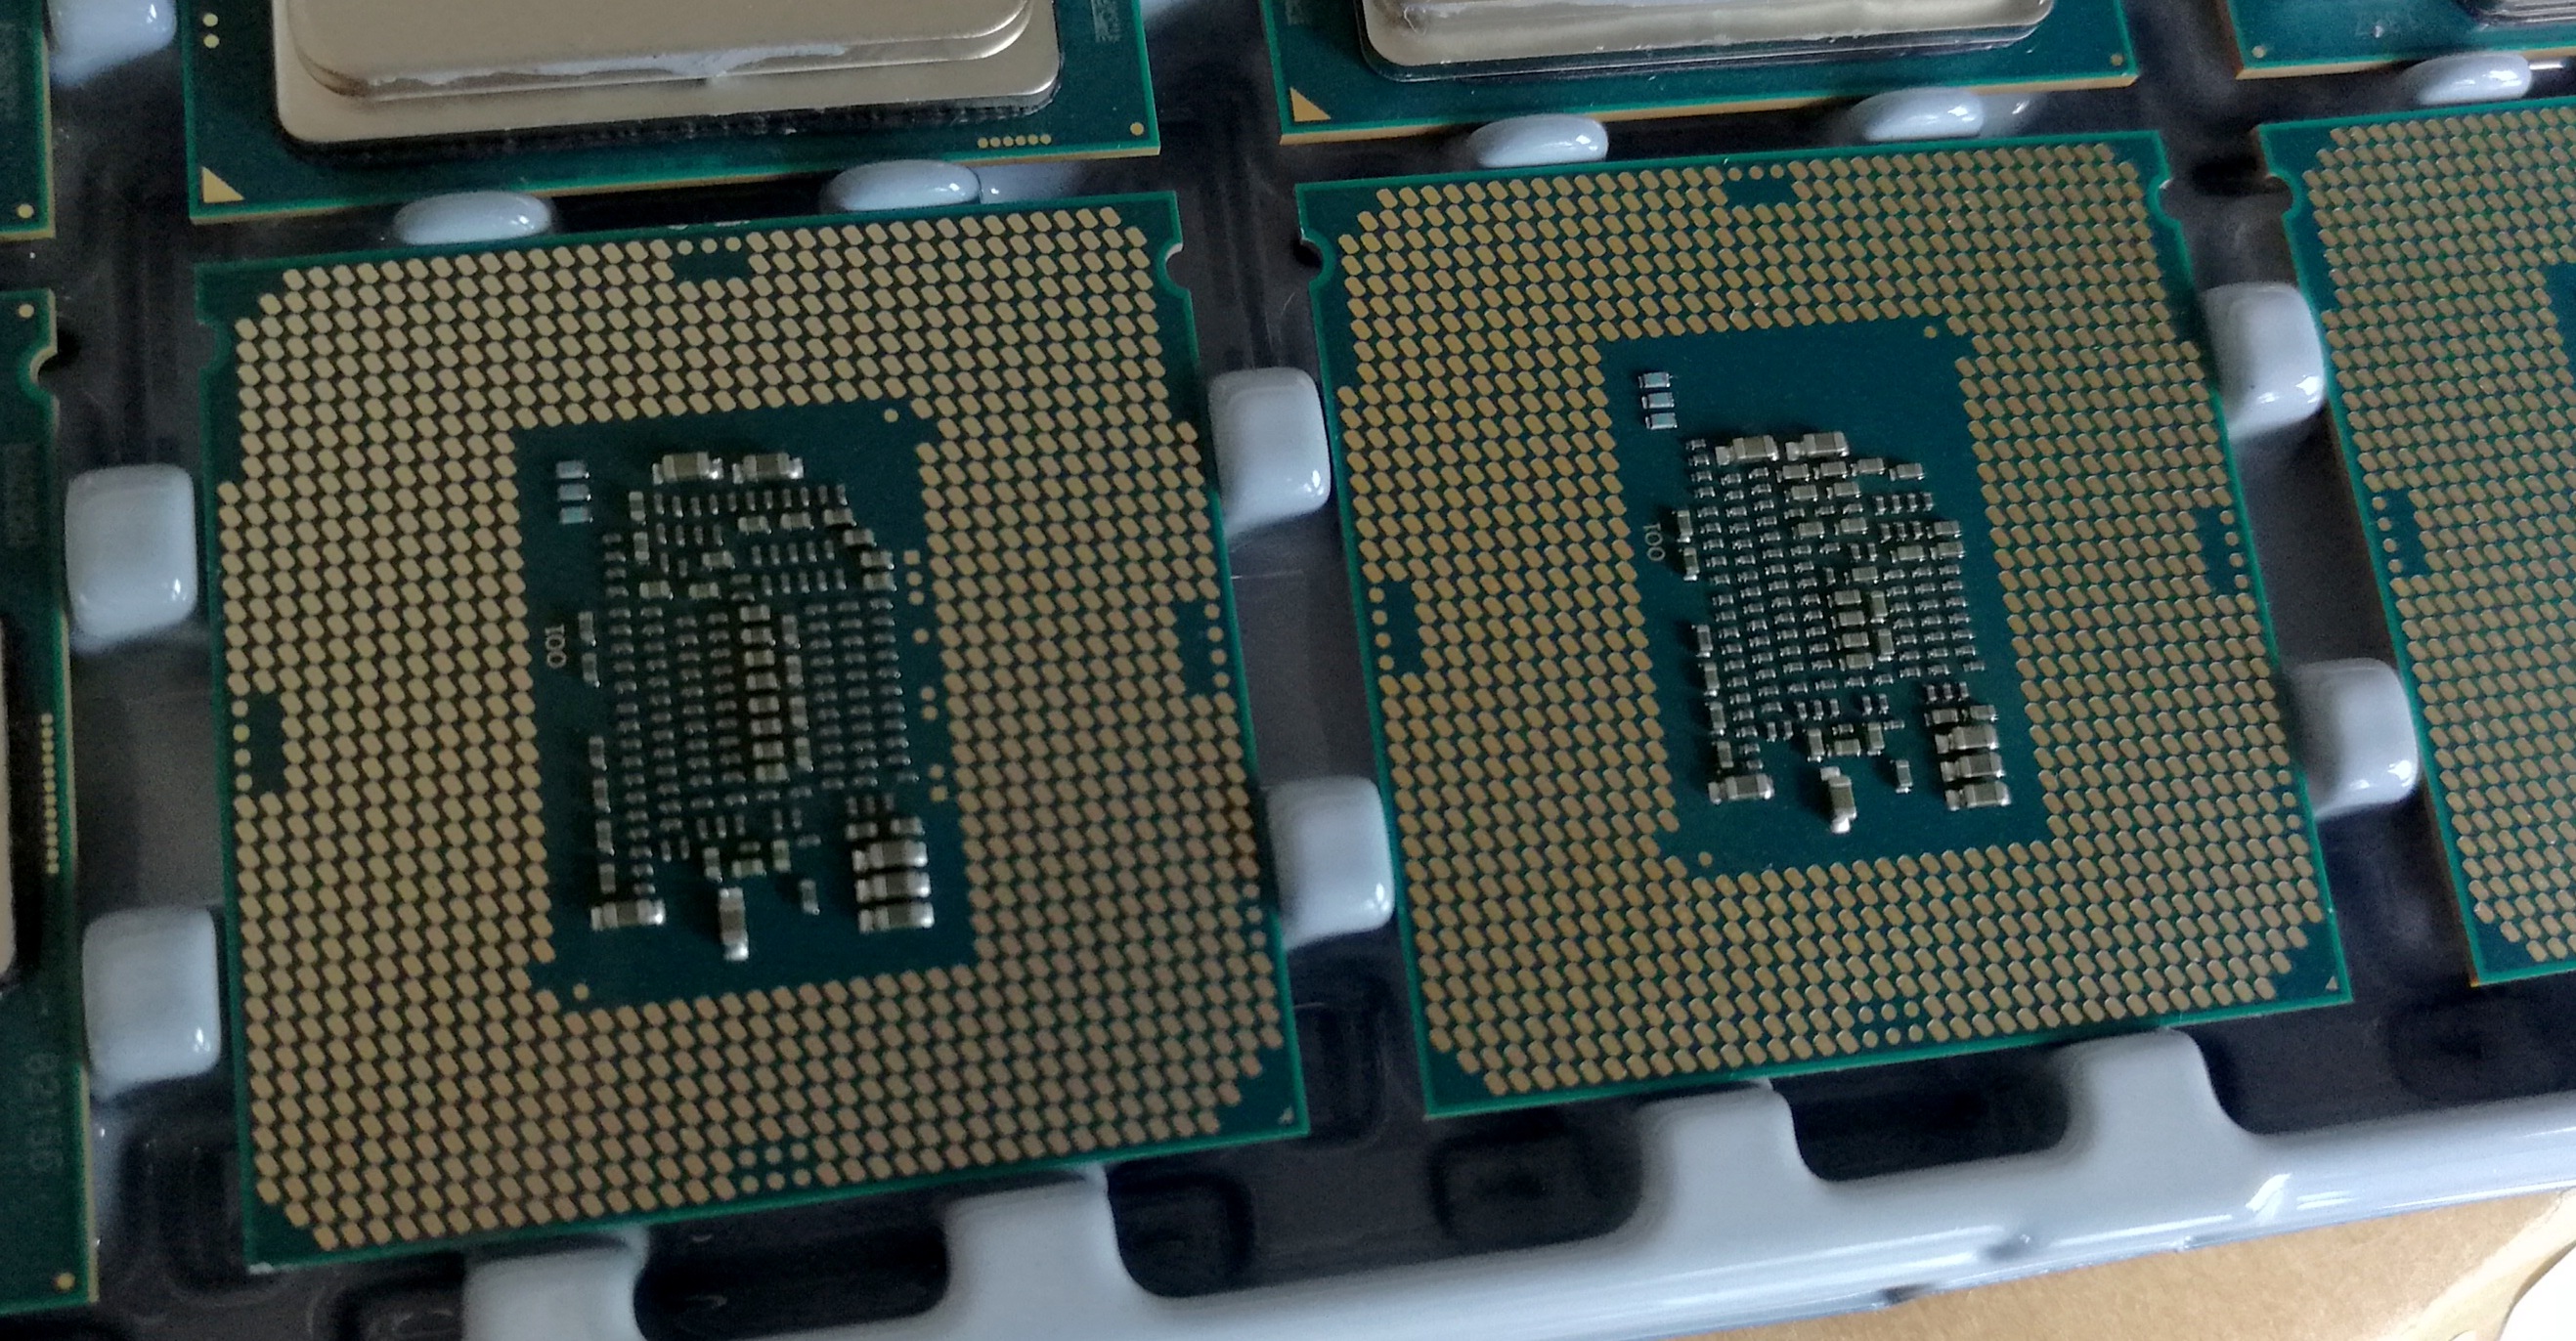 schroef Gewaad Of anders The Skylake Core i3 (51W) CPU Review: i3-6320, i3-6300 and i3-6100 Tested